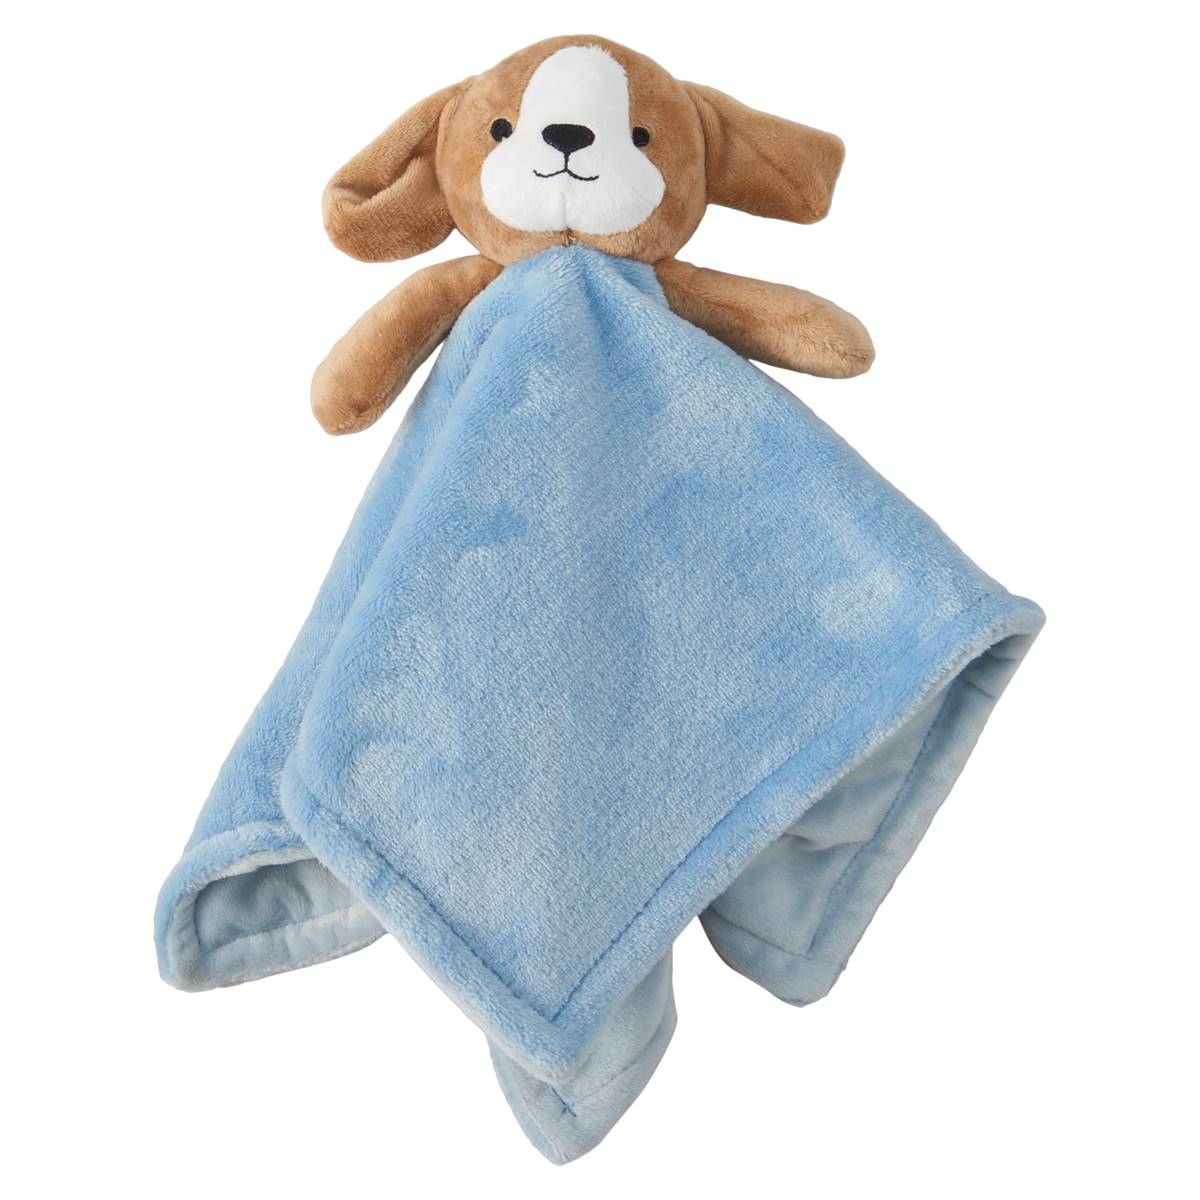 Carter's(R) Puppy Cuddle Buddy Plush Security Blanket